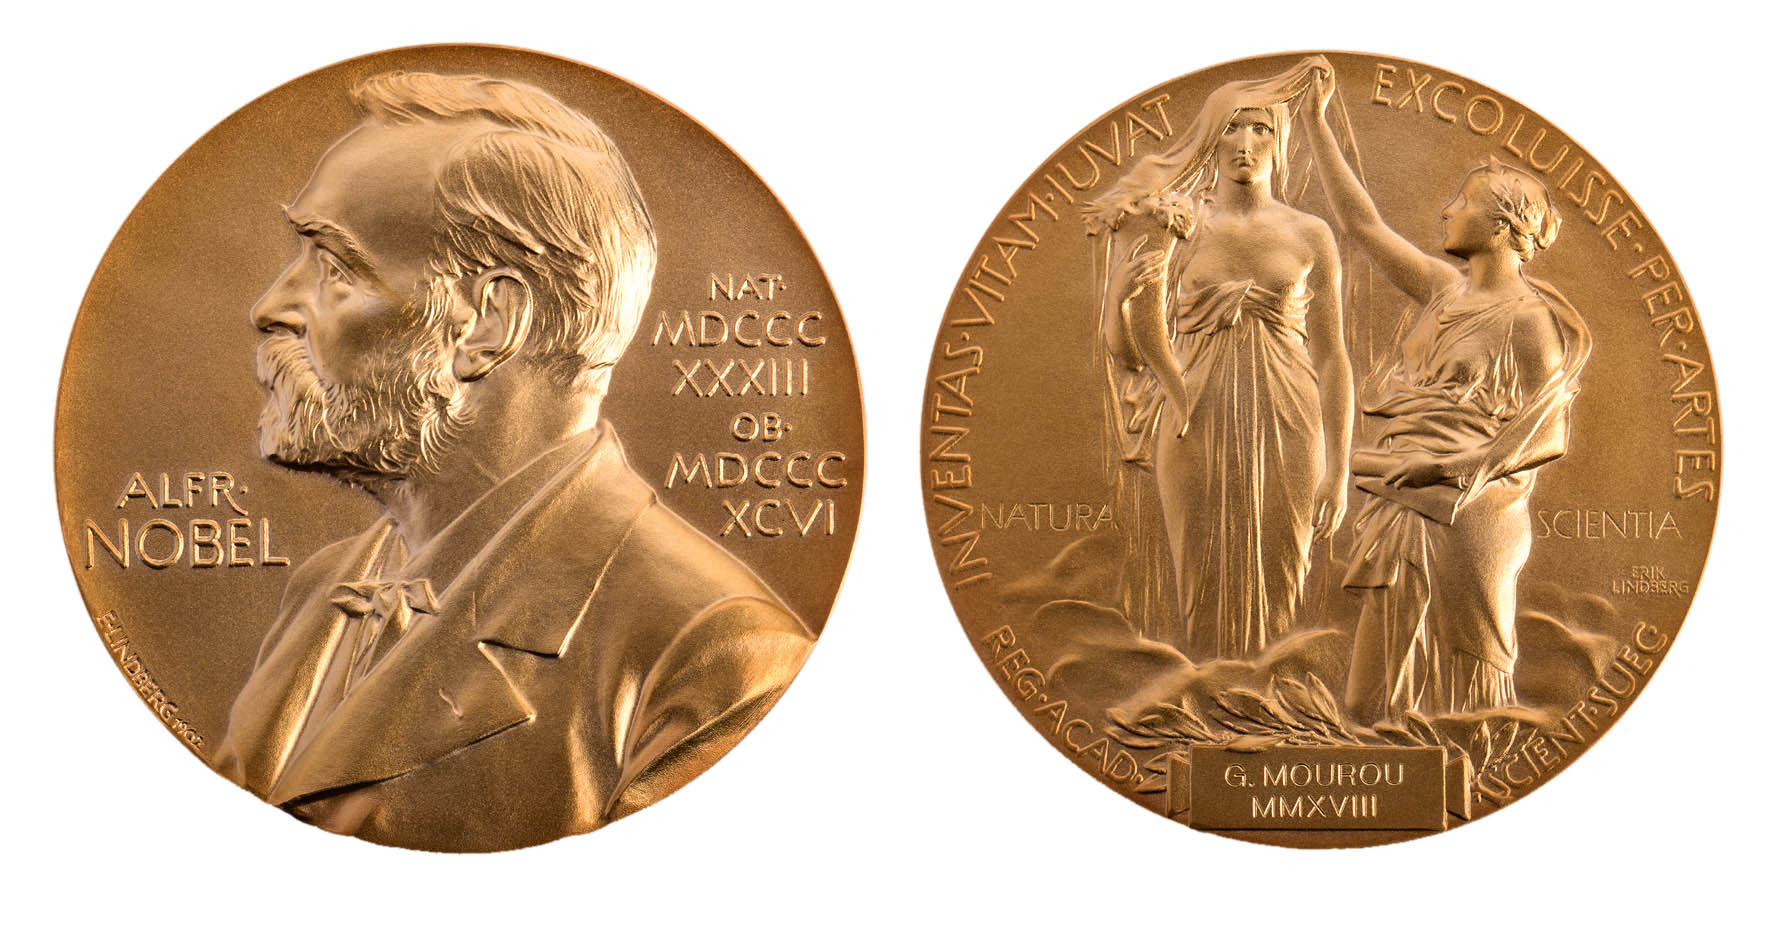 Medaile Nobelovy ceny za fyziku pro Grarda Mouroua